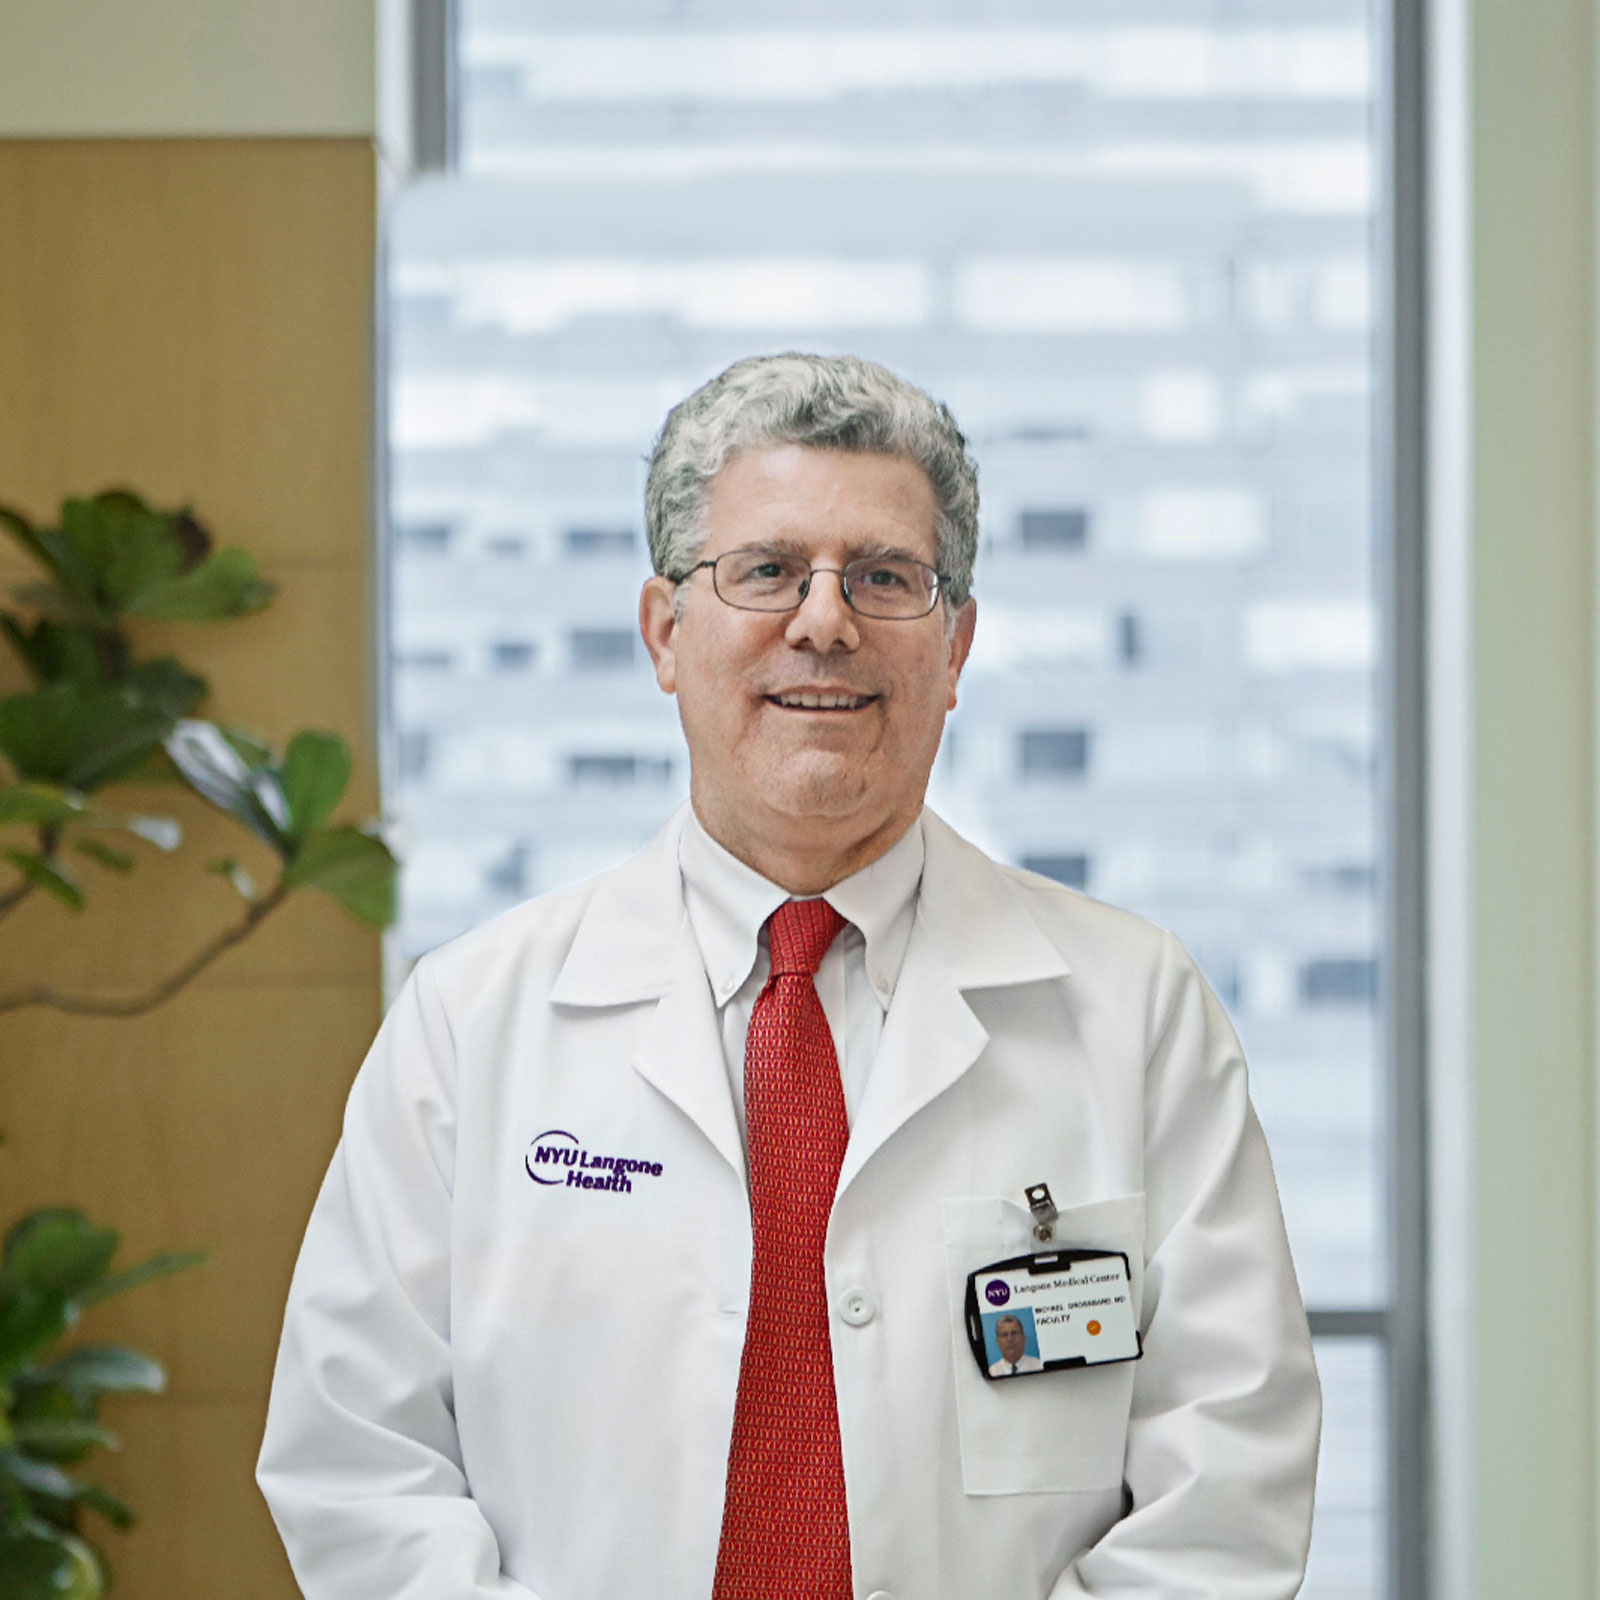 Dr. Michael Grossbard